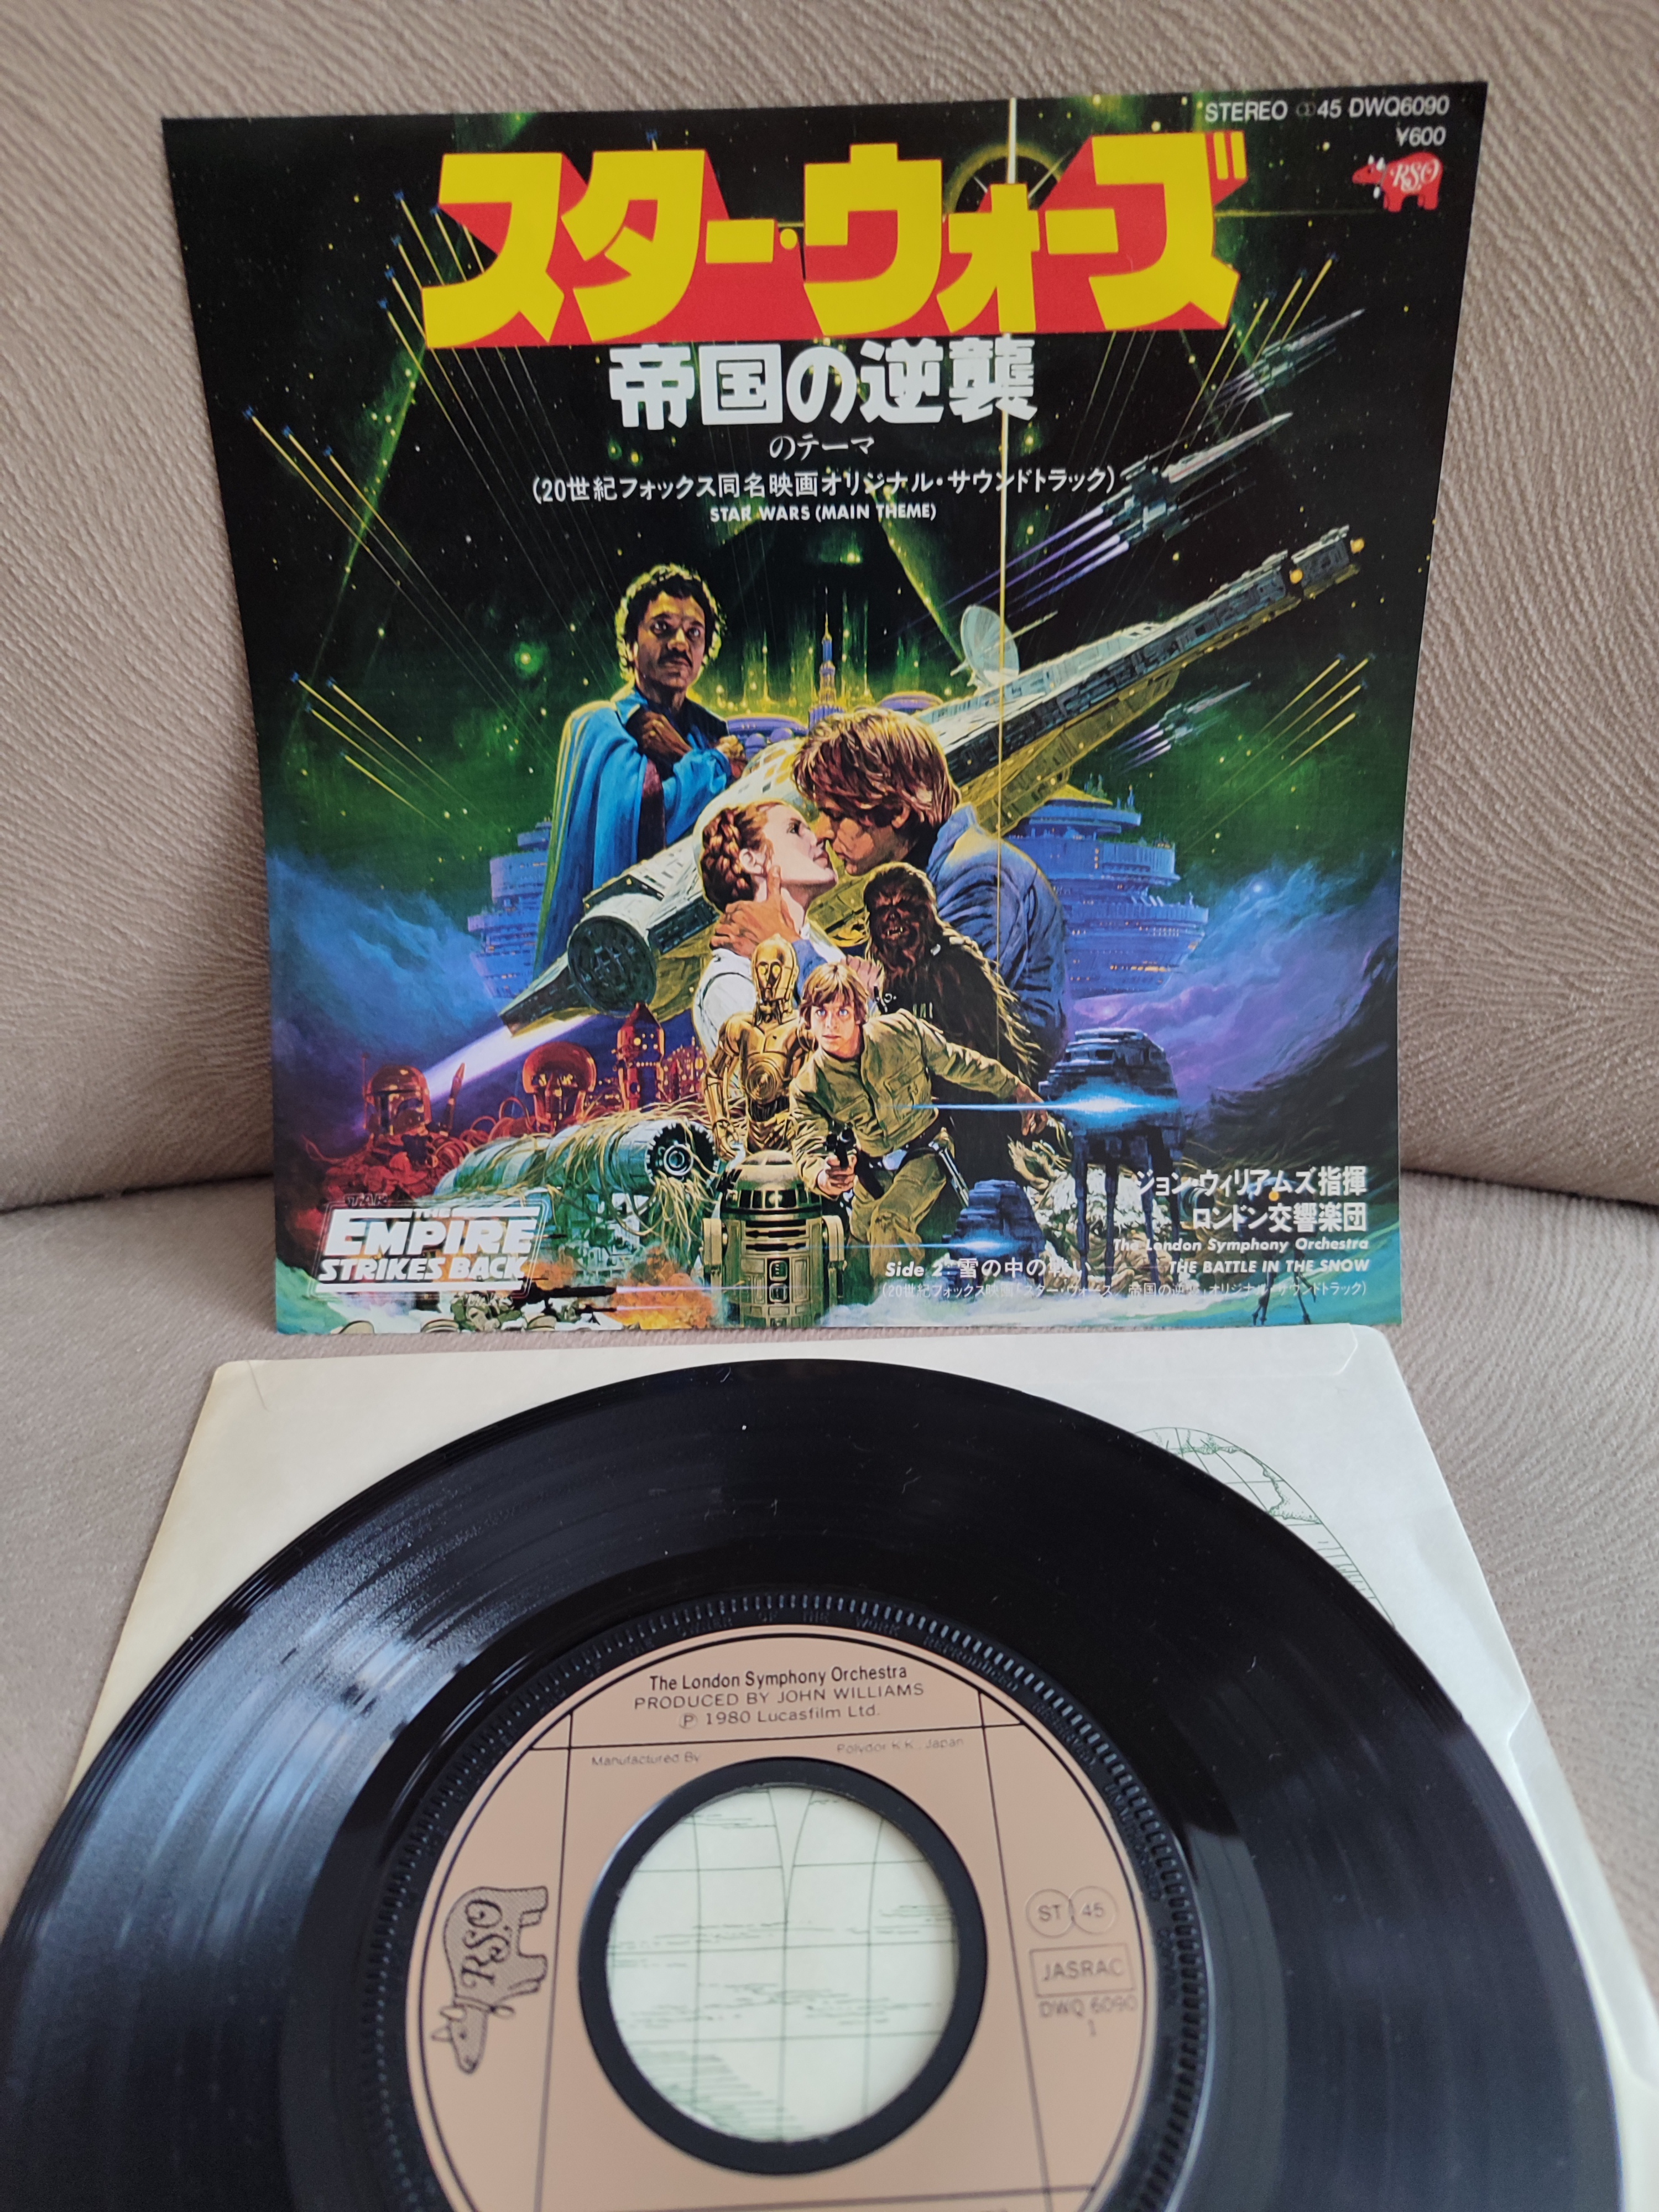 STAR WARS Main Theme / The Battle in The Snow - 1980 Japonya Basım Nadir 45lik Plak 2. el